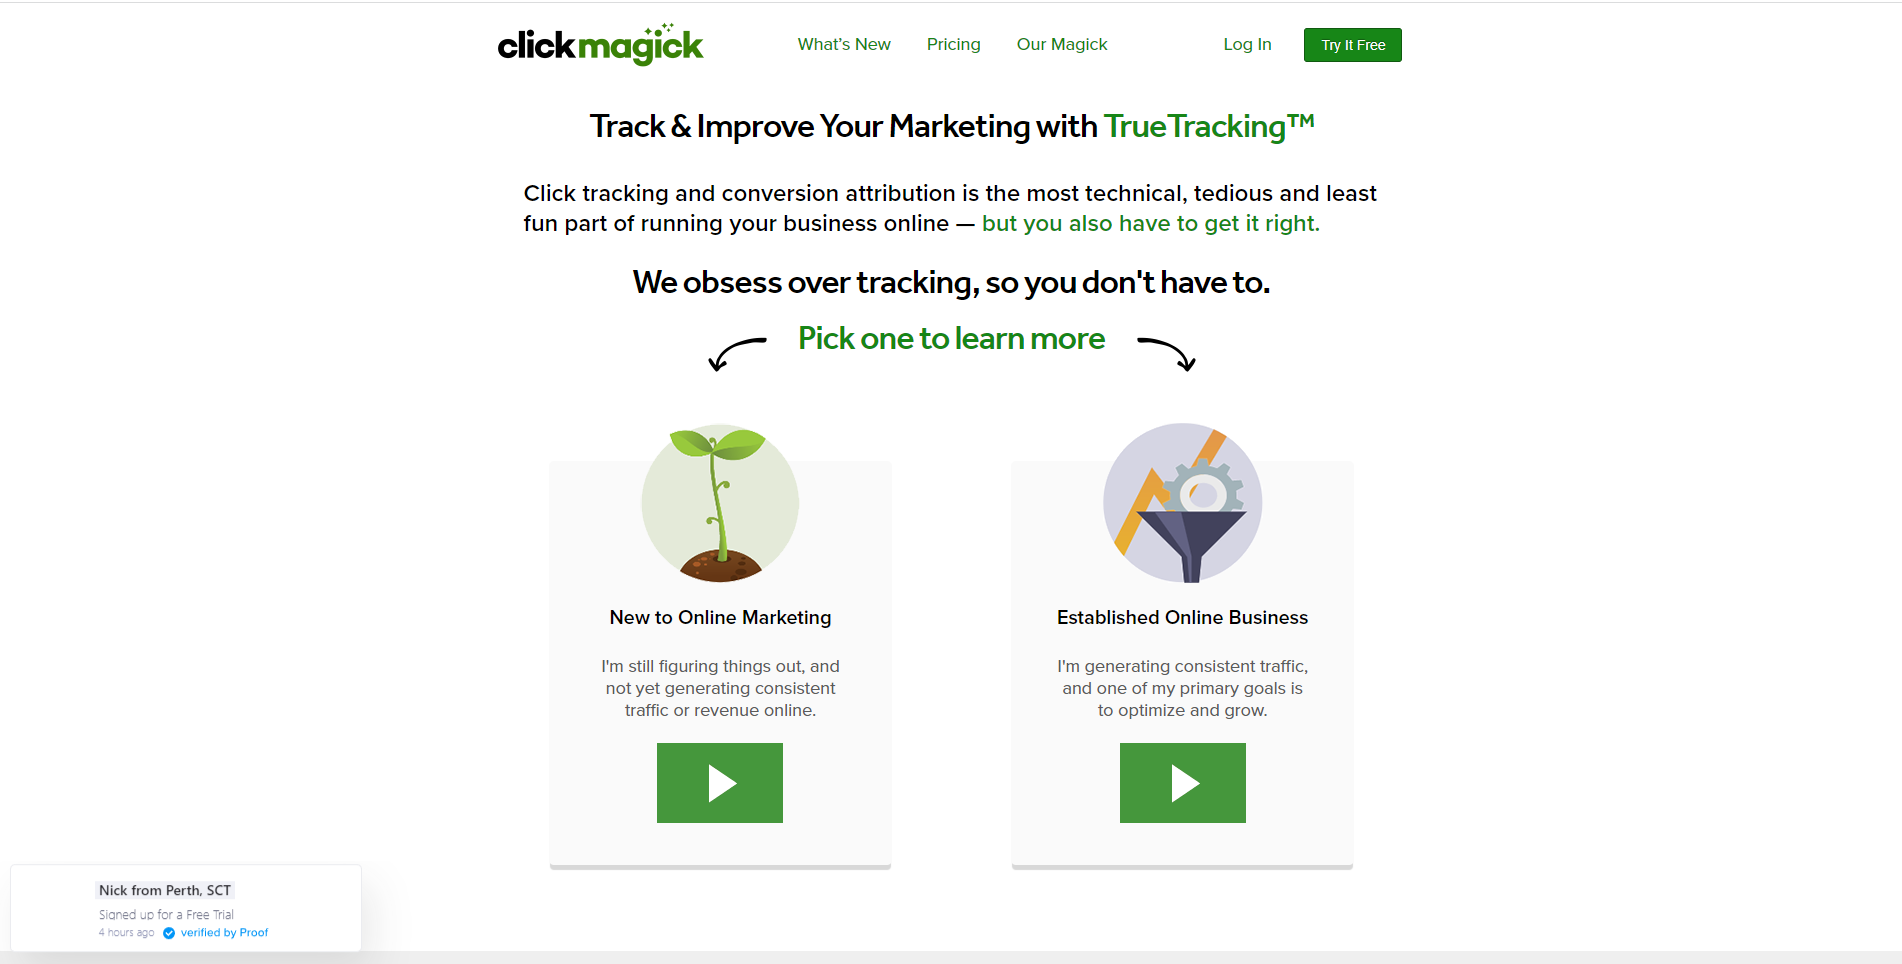 ClickMagick - Free 14 Days